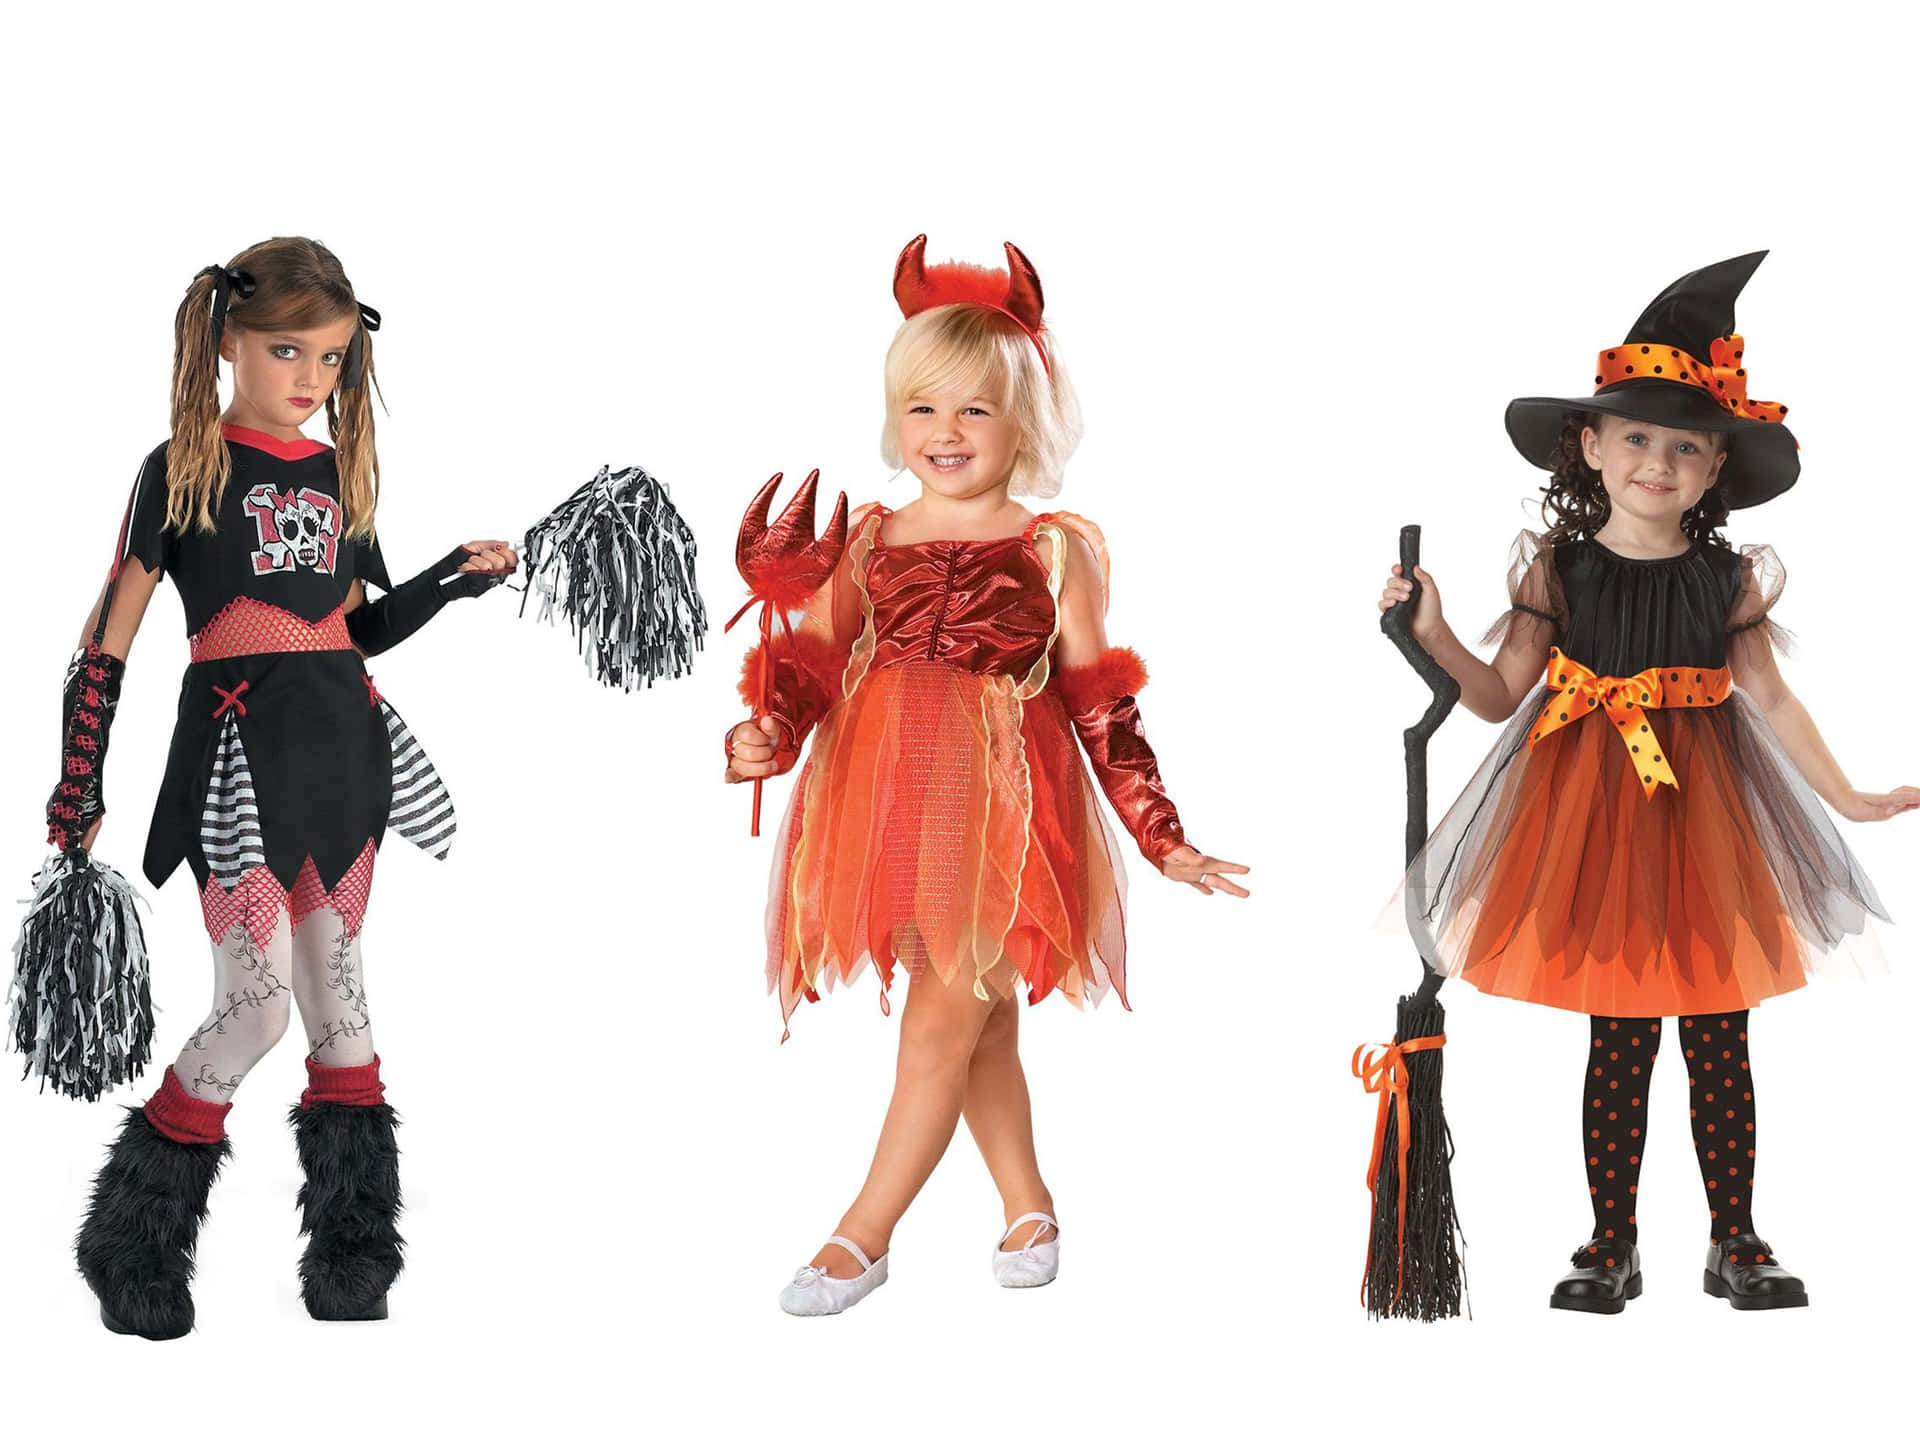 Download Halloween Costume Pictures 2272 X 1704 | Wallpapers.com